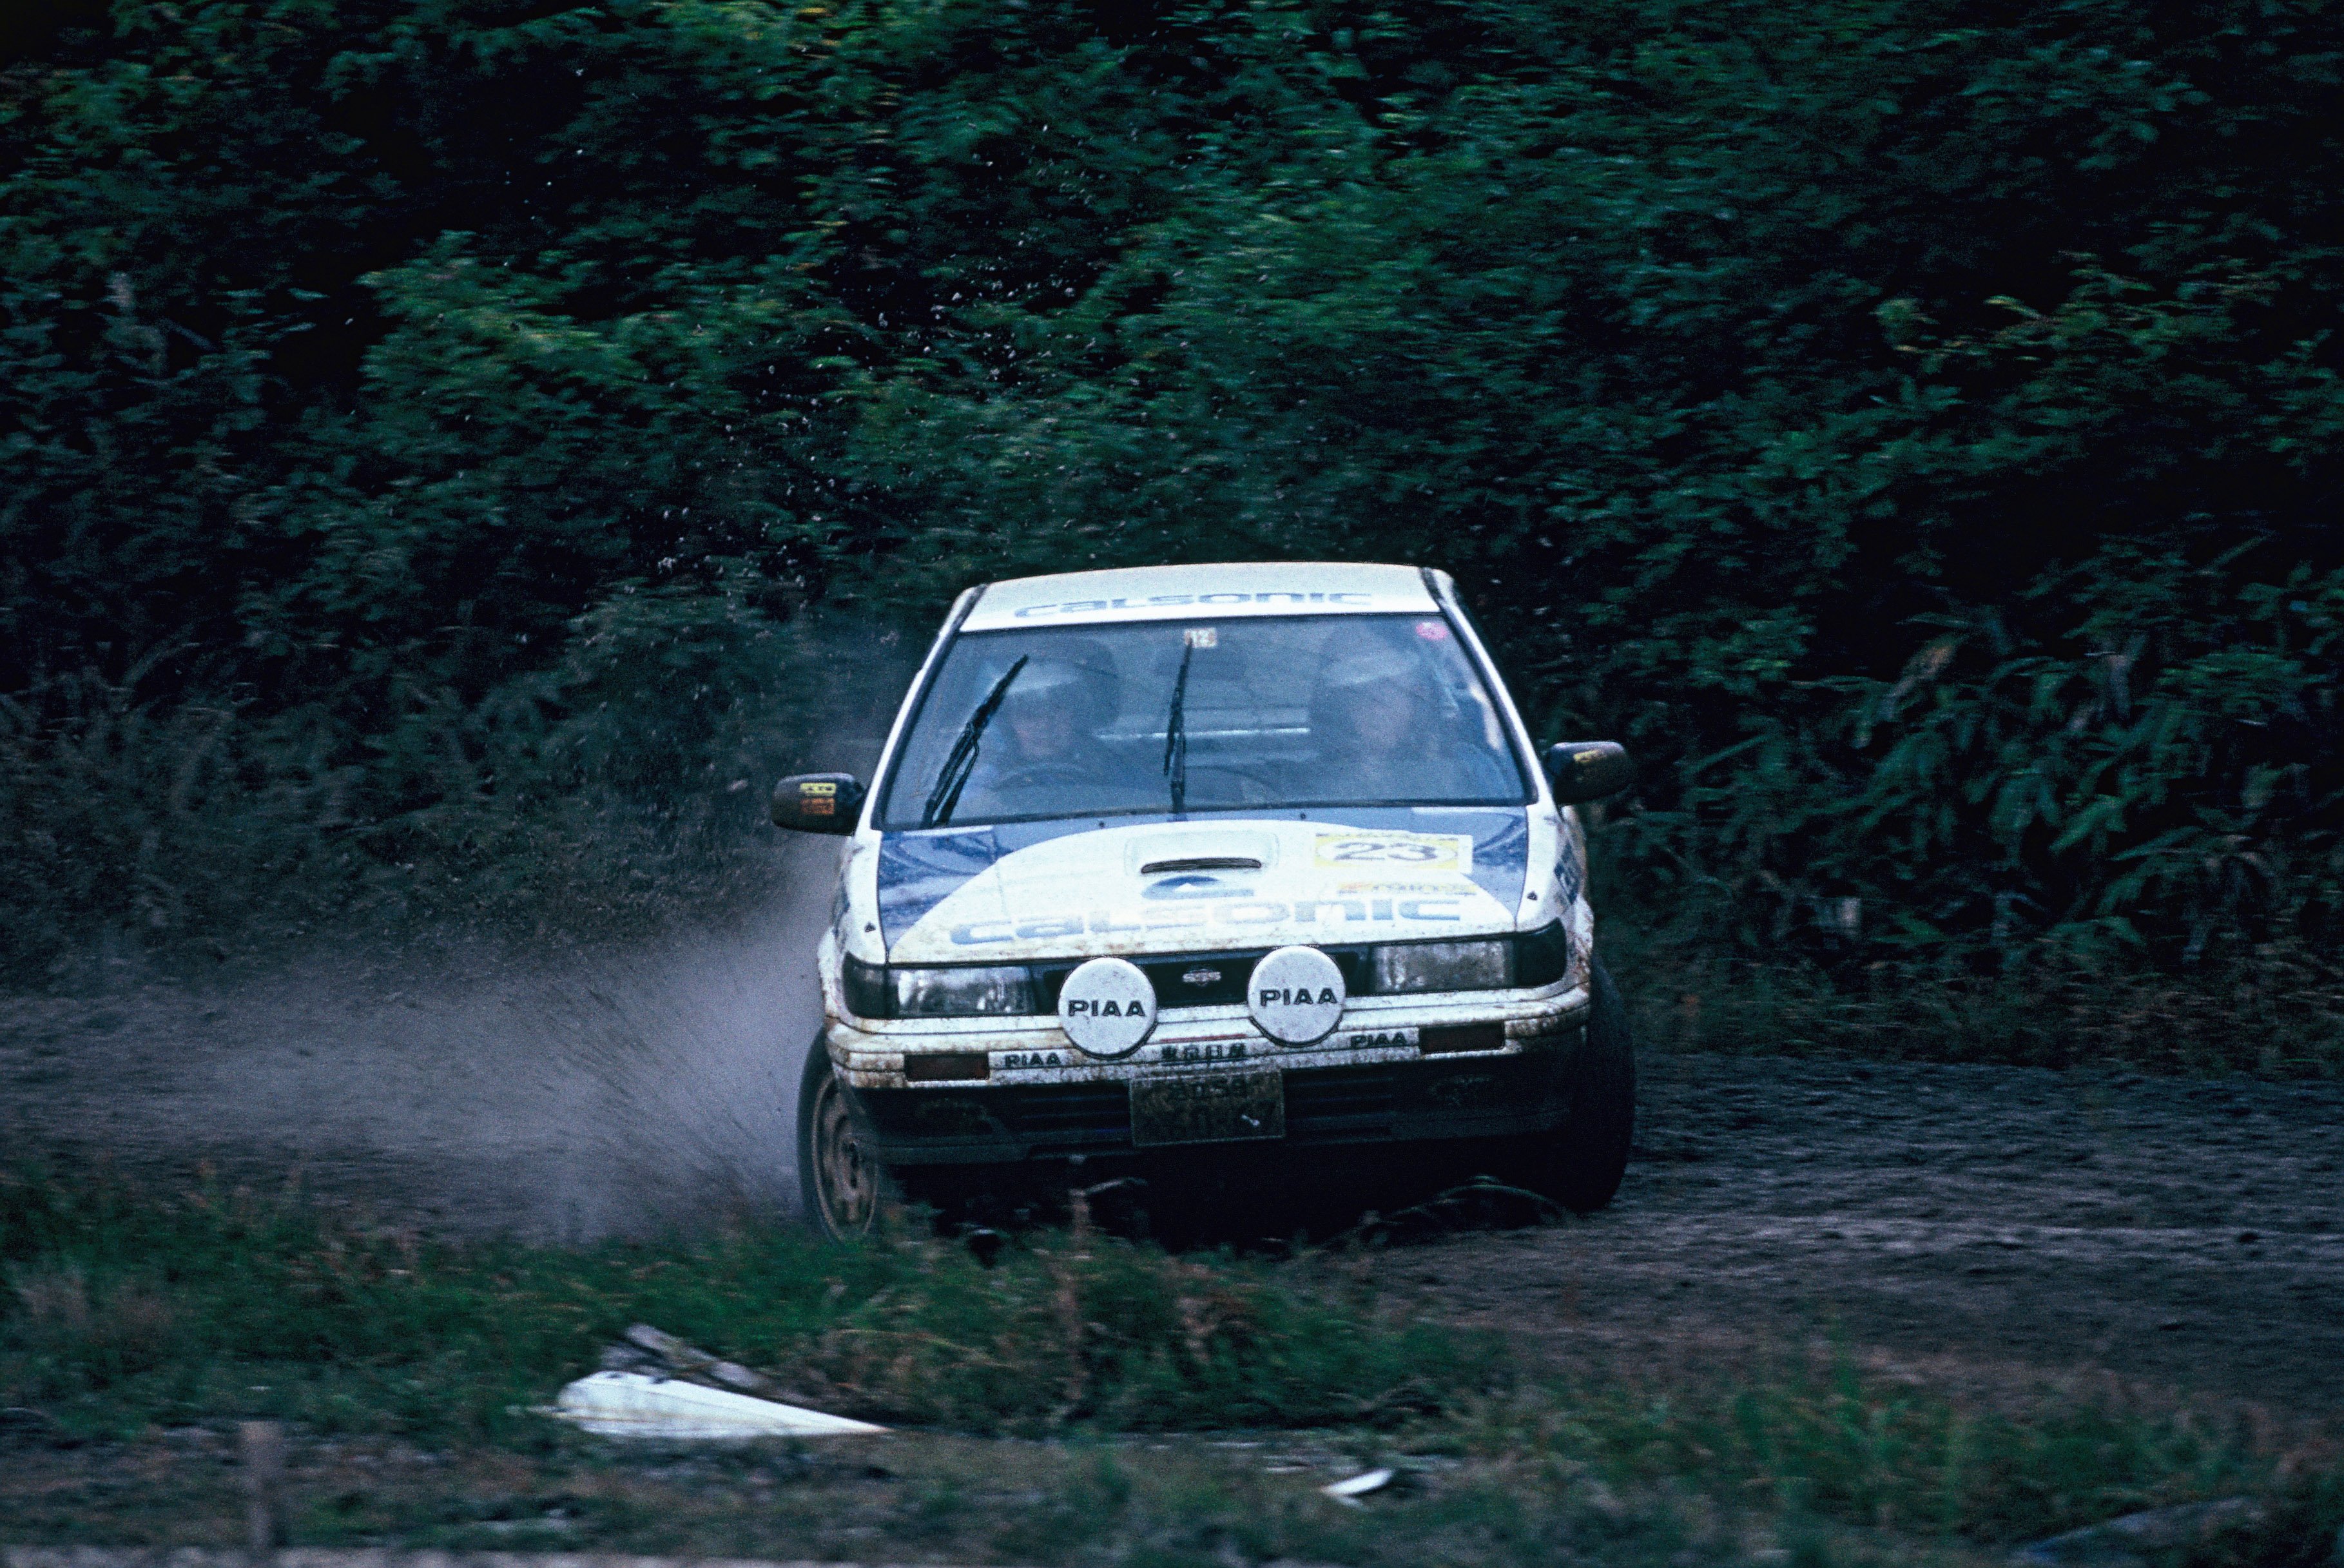 1989, Nismo, Nissan, Bluebird, Sss r, U12, Rally, Race, Racing Wallpaper